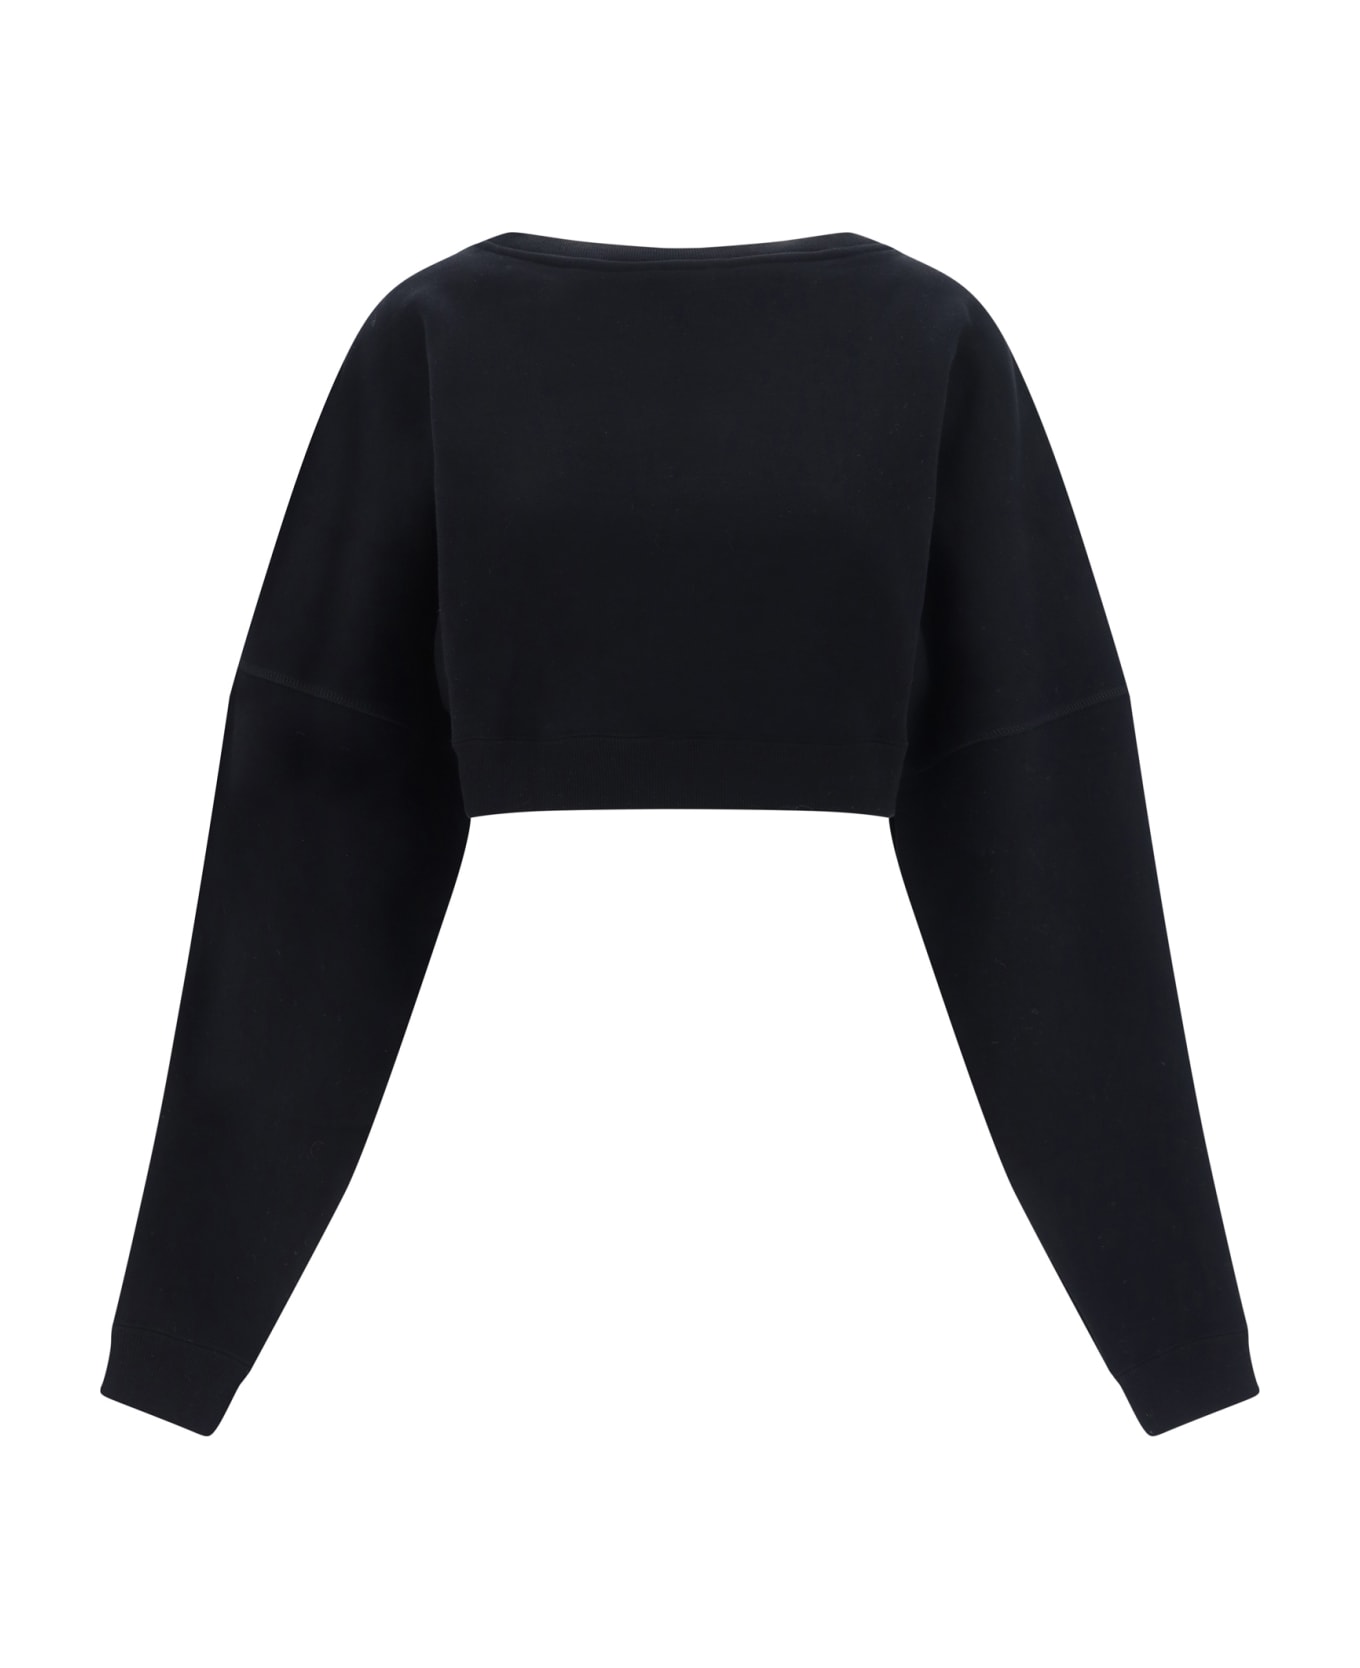 Saint Laurent Crewneck Cropped Sweatshirt - Black